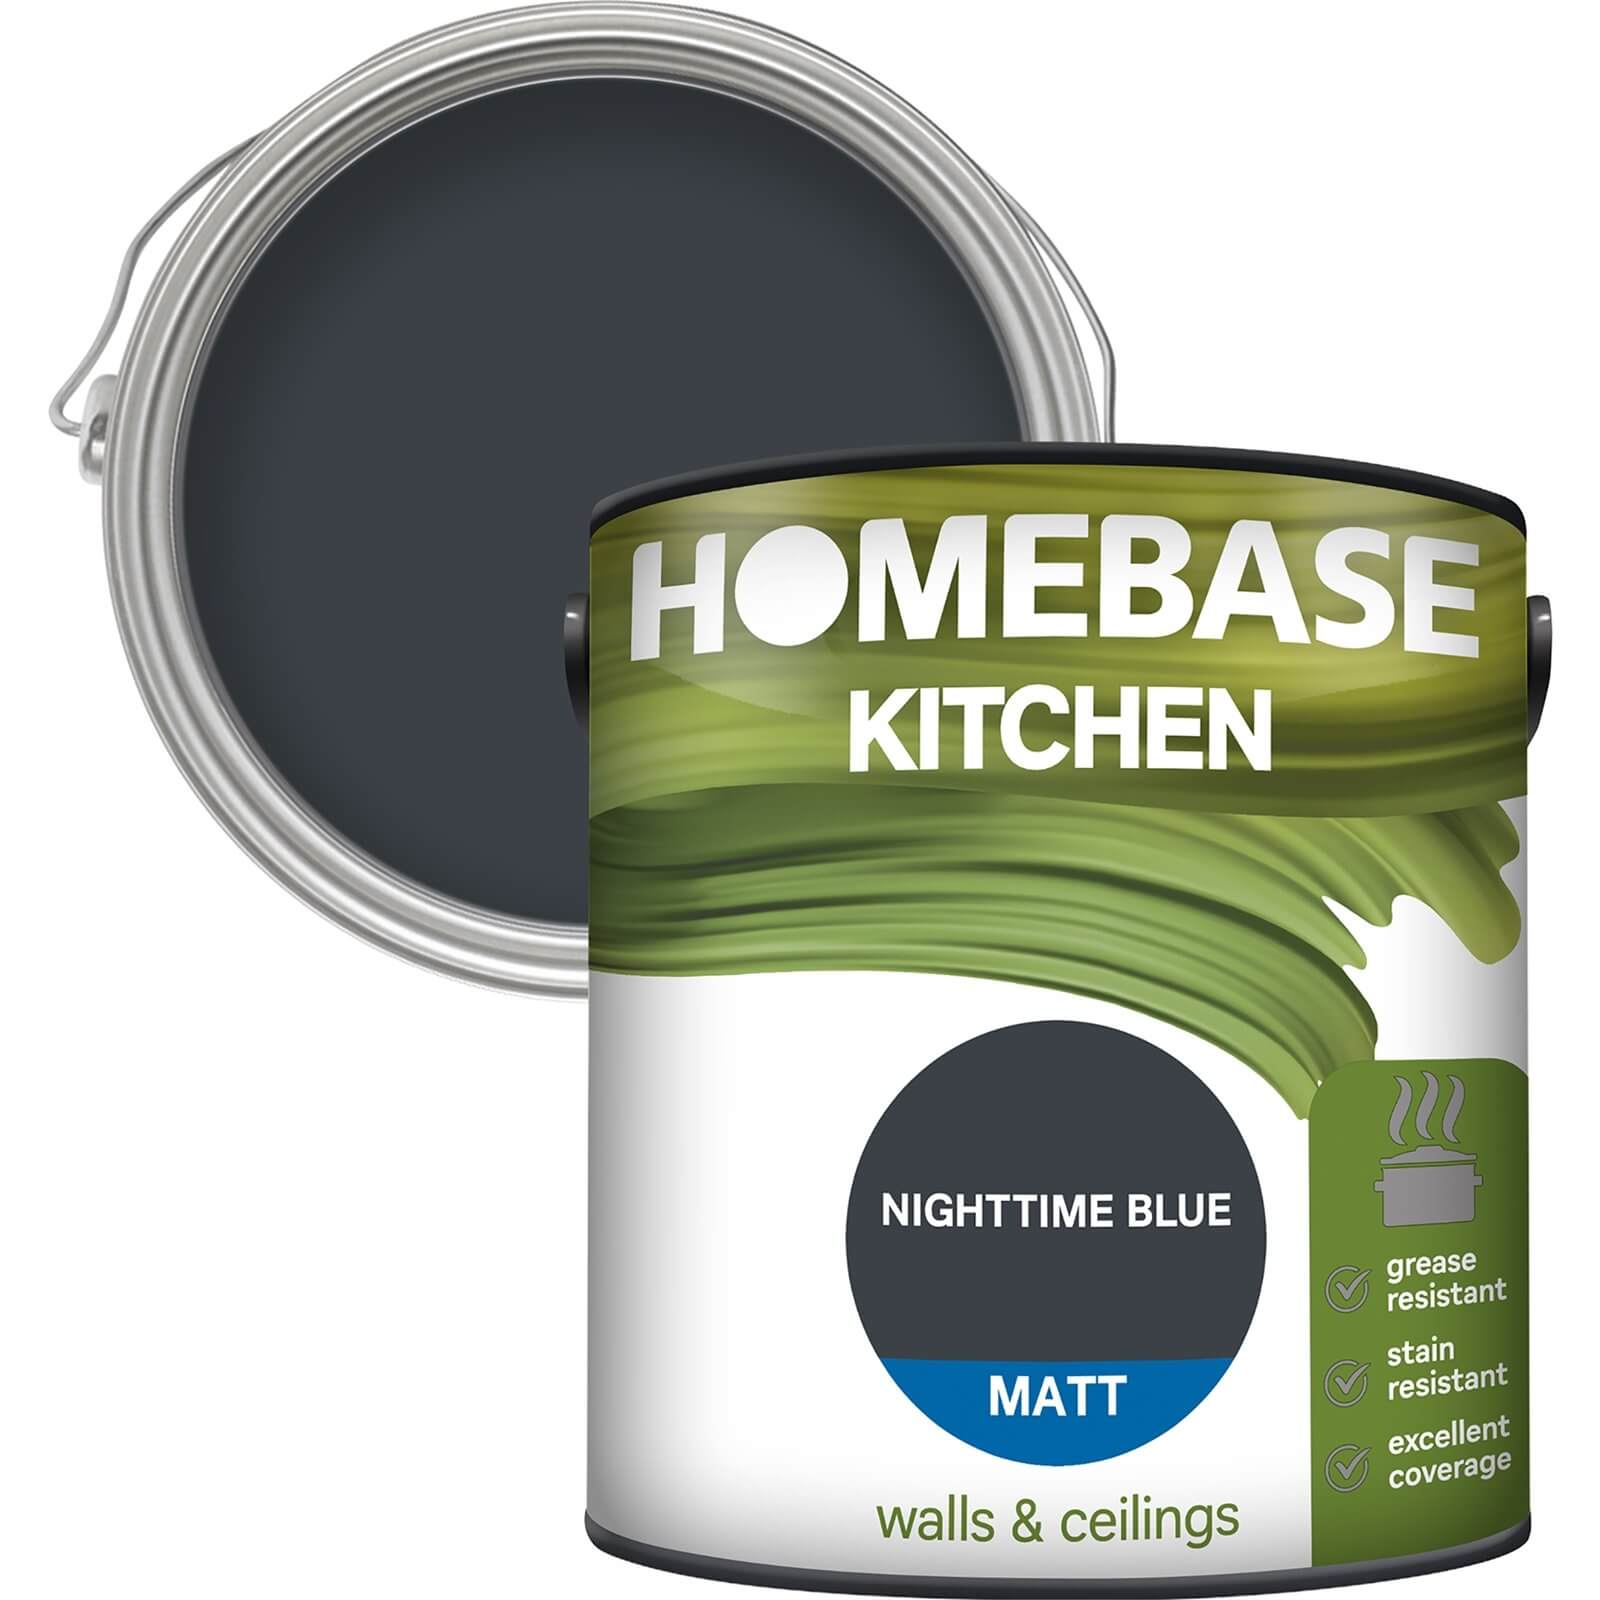 Homebase Kitchen Matt Paint - Nighttime Blue 2.5L